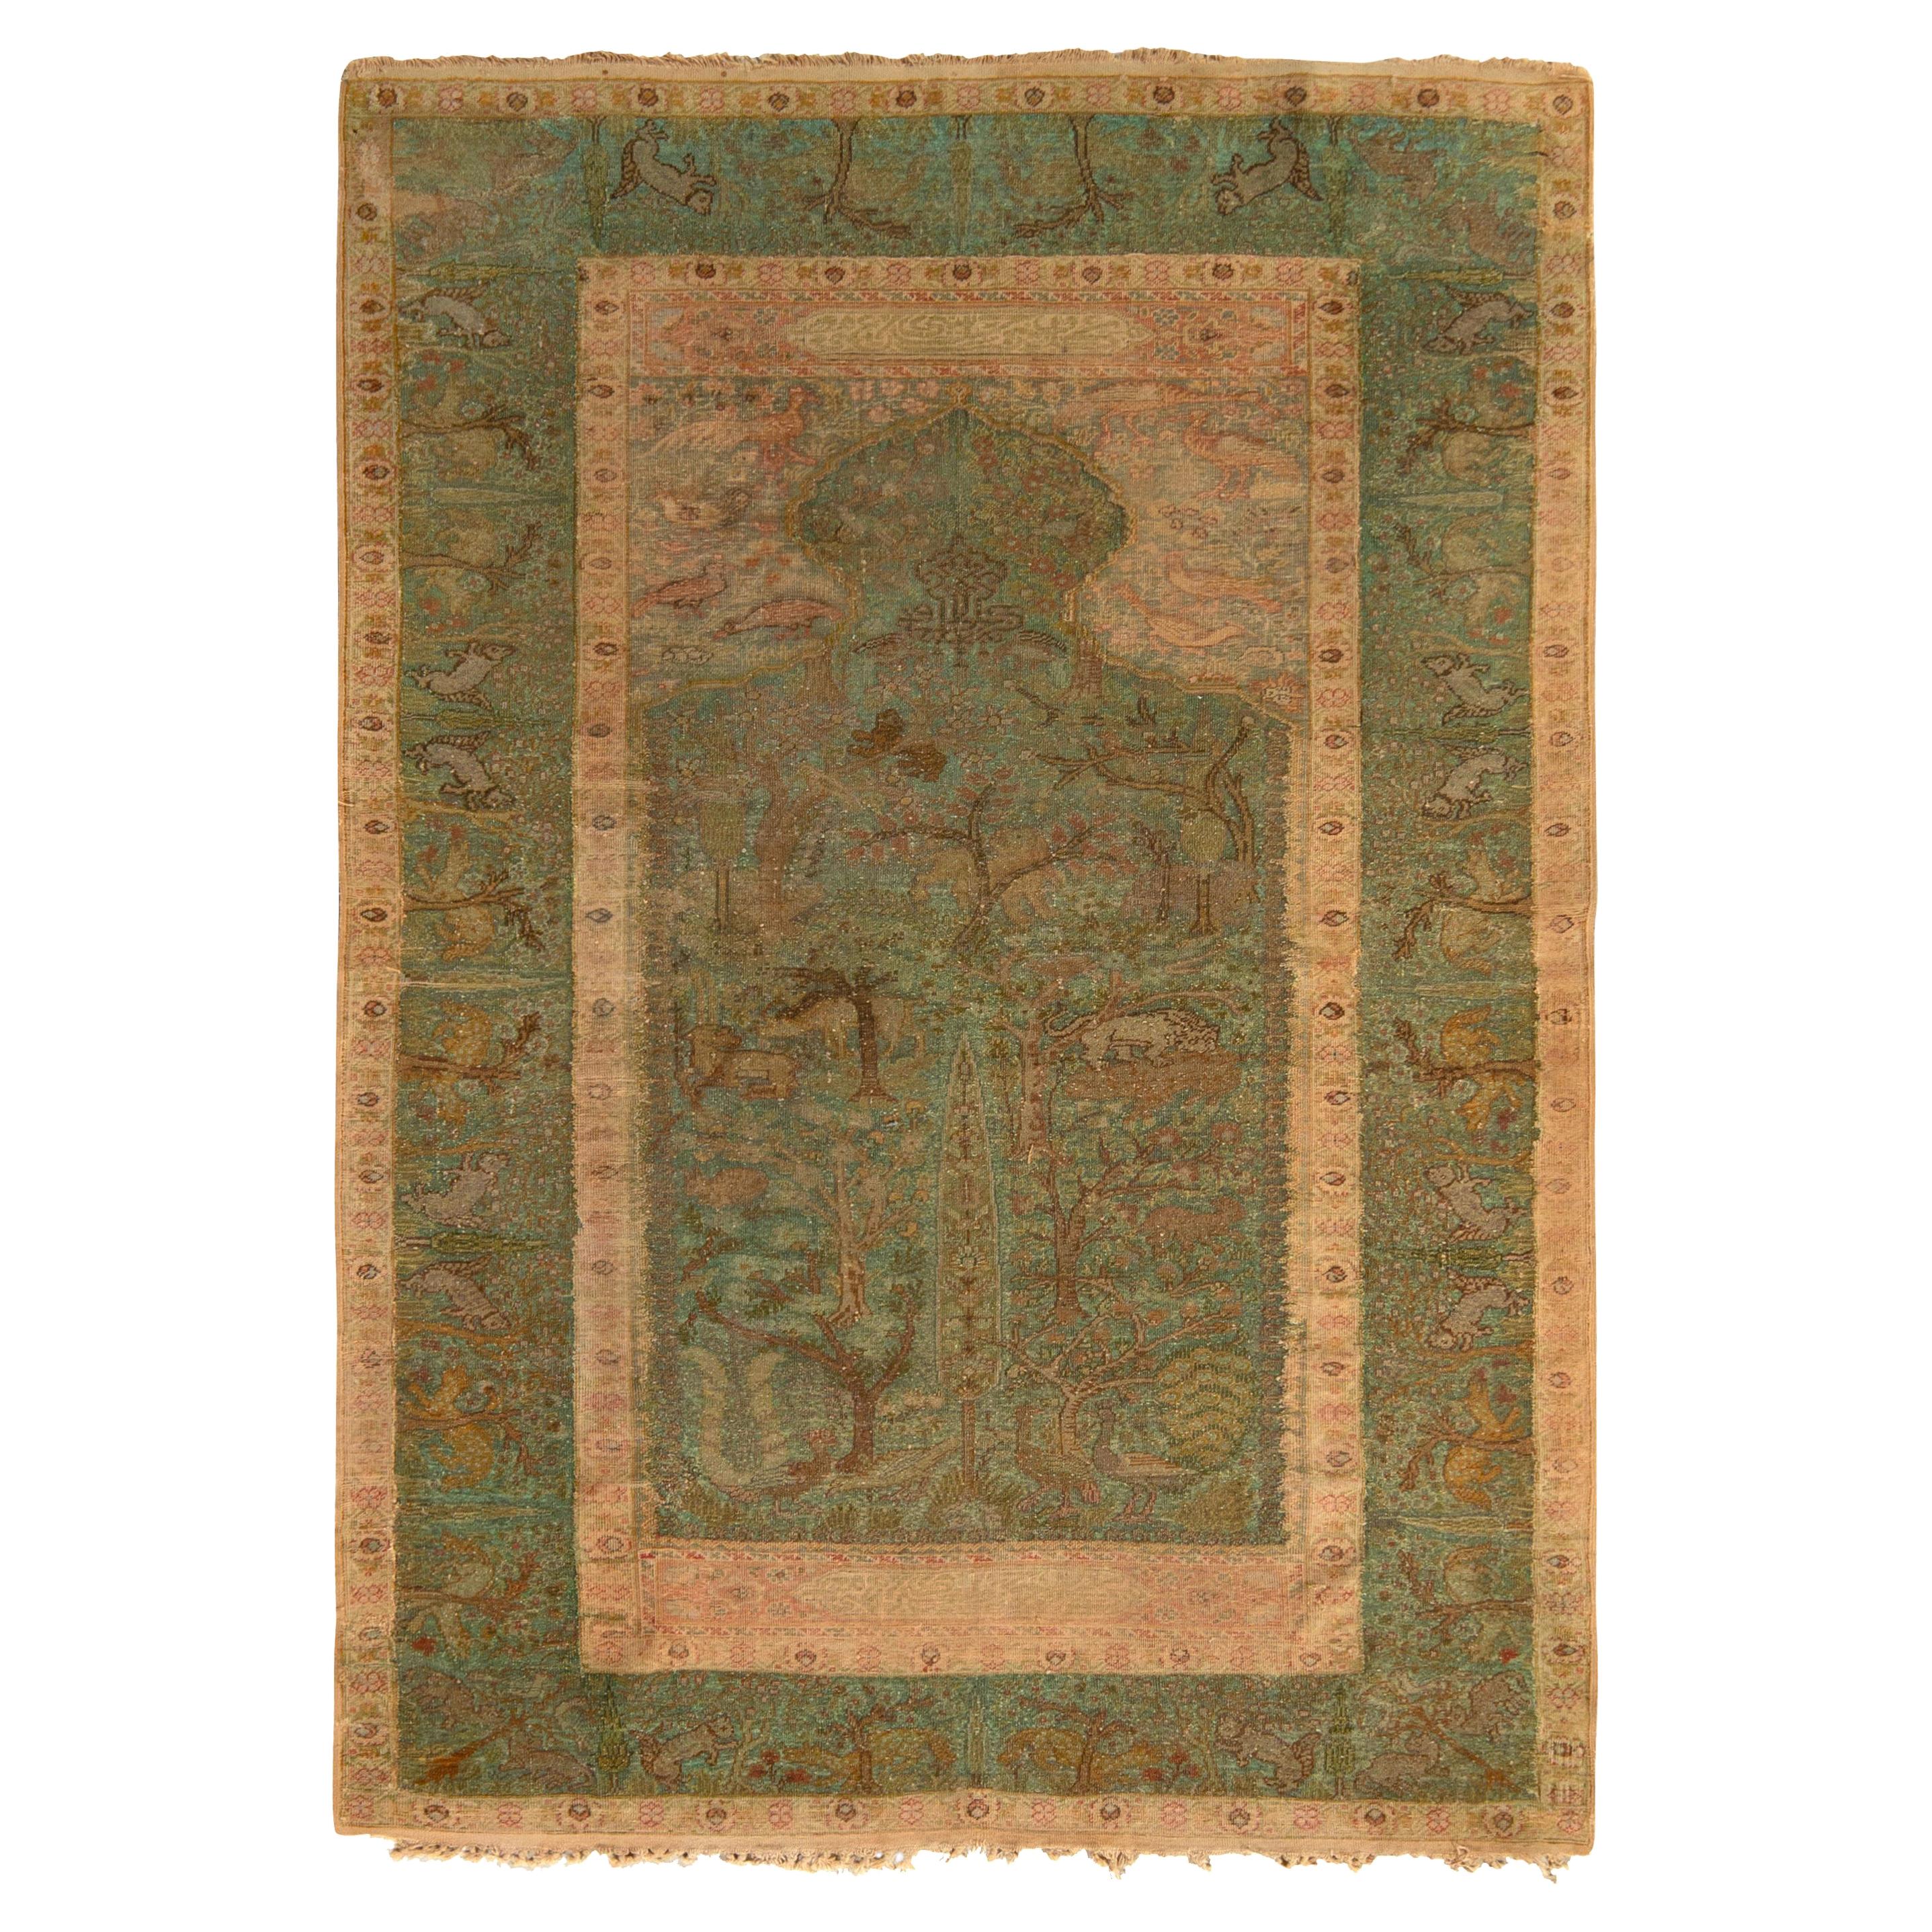 Antique Kayseri Rug in Green and Beige-Brown Floral Pattern by Rug & Kilim For Sale